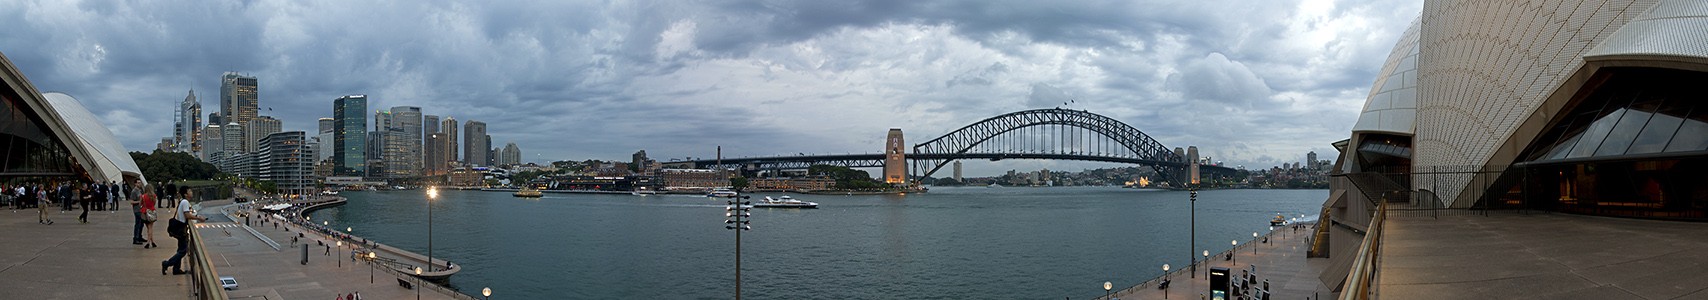 Rund um Sydney Cove Sydney